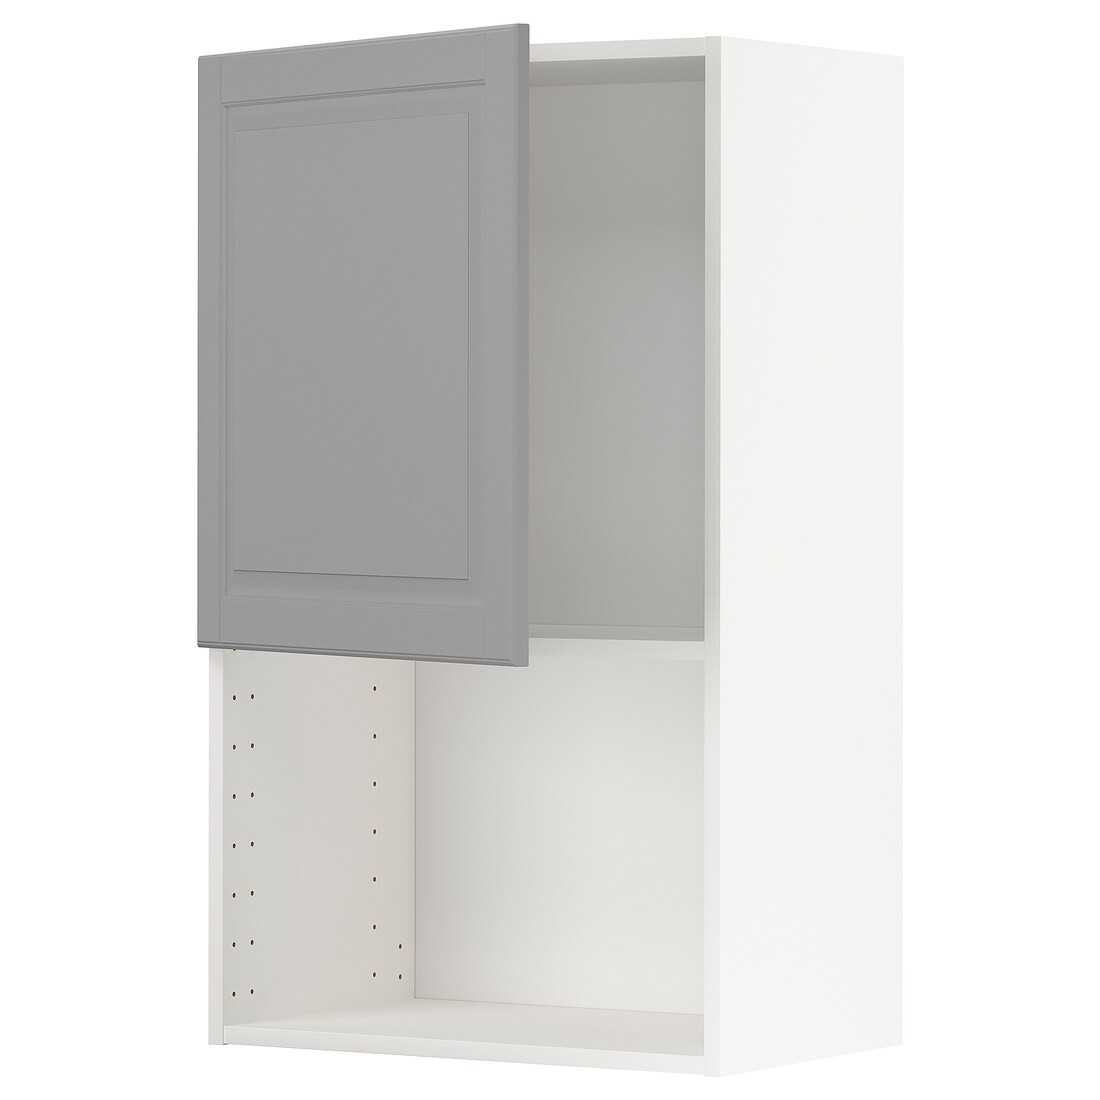 IKEA METOD МЕТОД Навесной шкаф для СВЧ-печи, белый / Bodbyn серый, 60x100 см 49464692 | 494.646.92